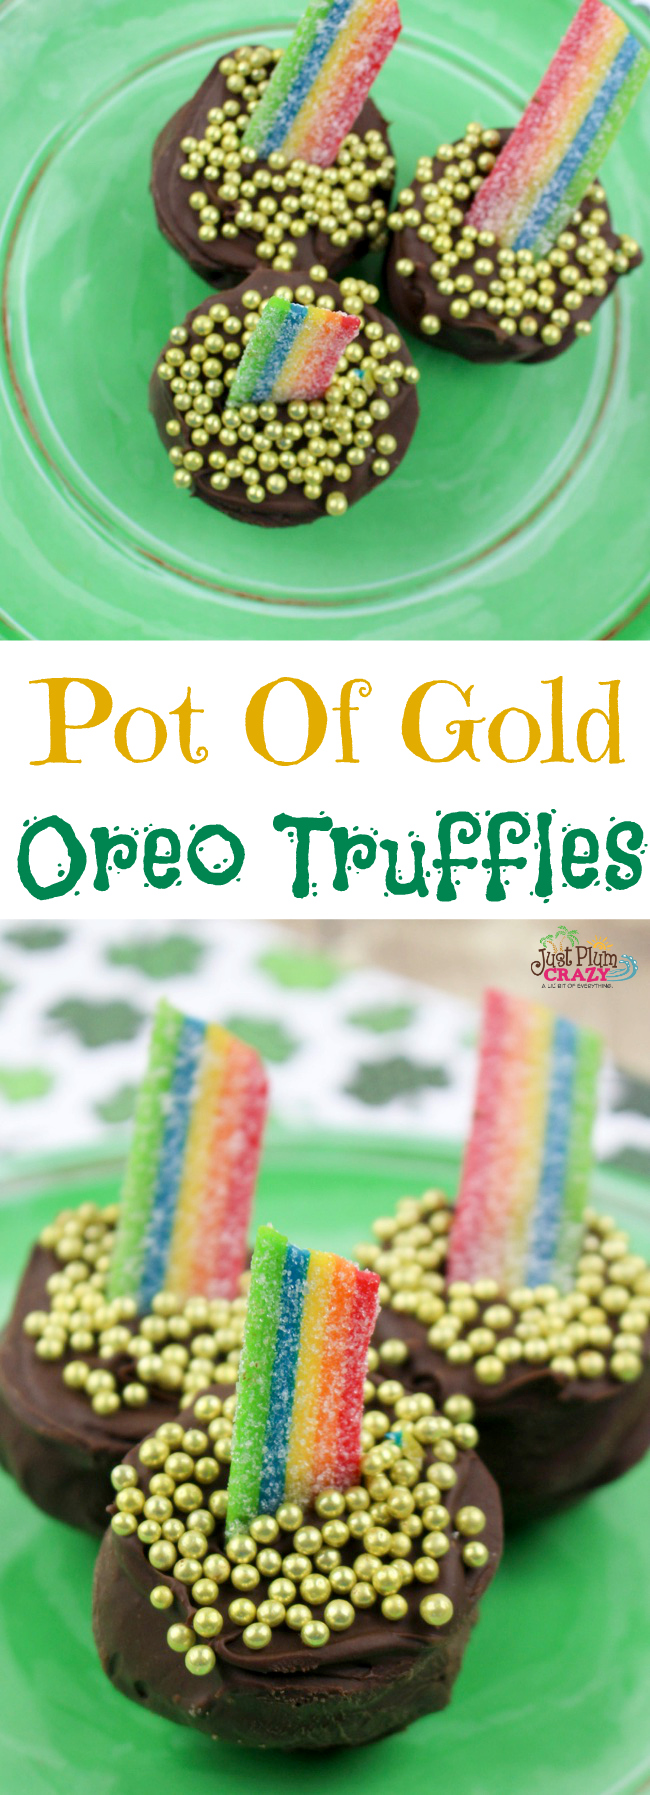 Oreo Truffle Ball - A Pot O' Gold Recipe